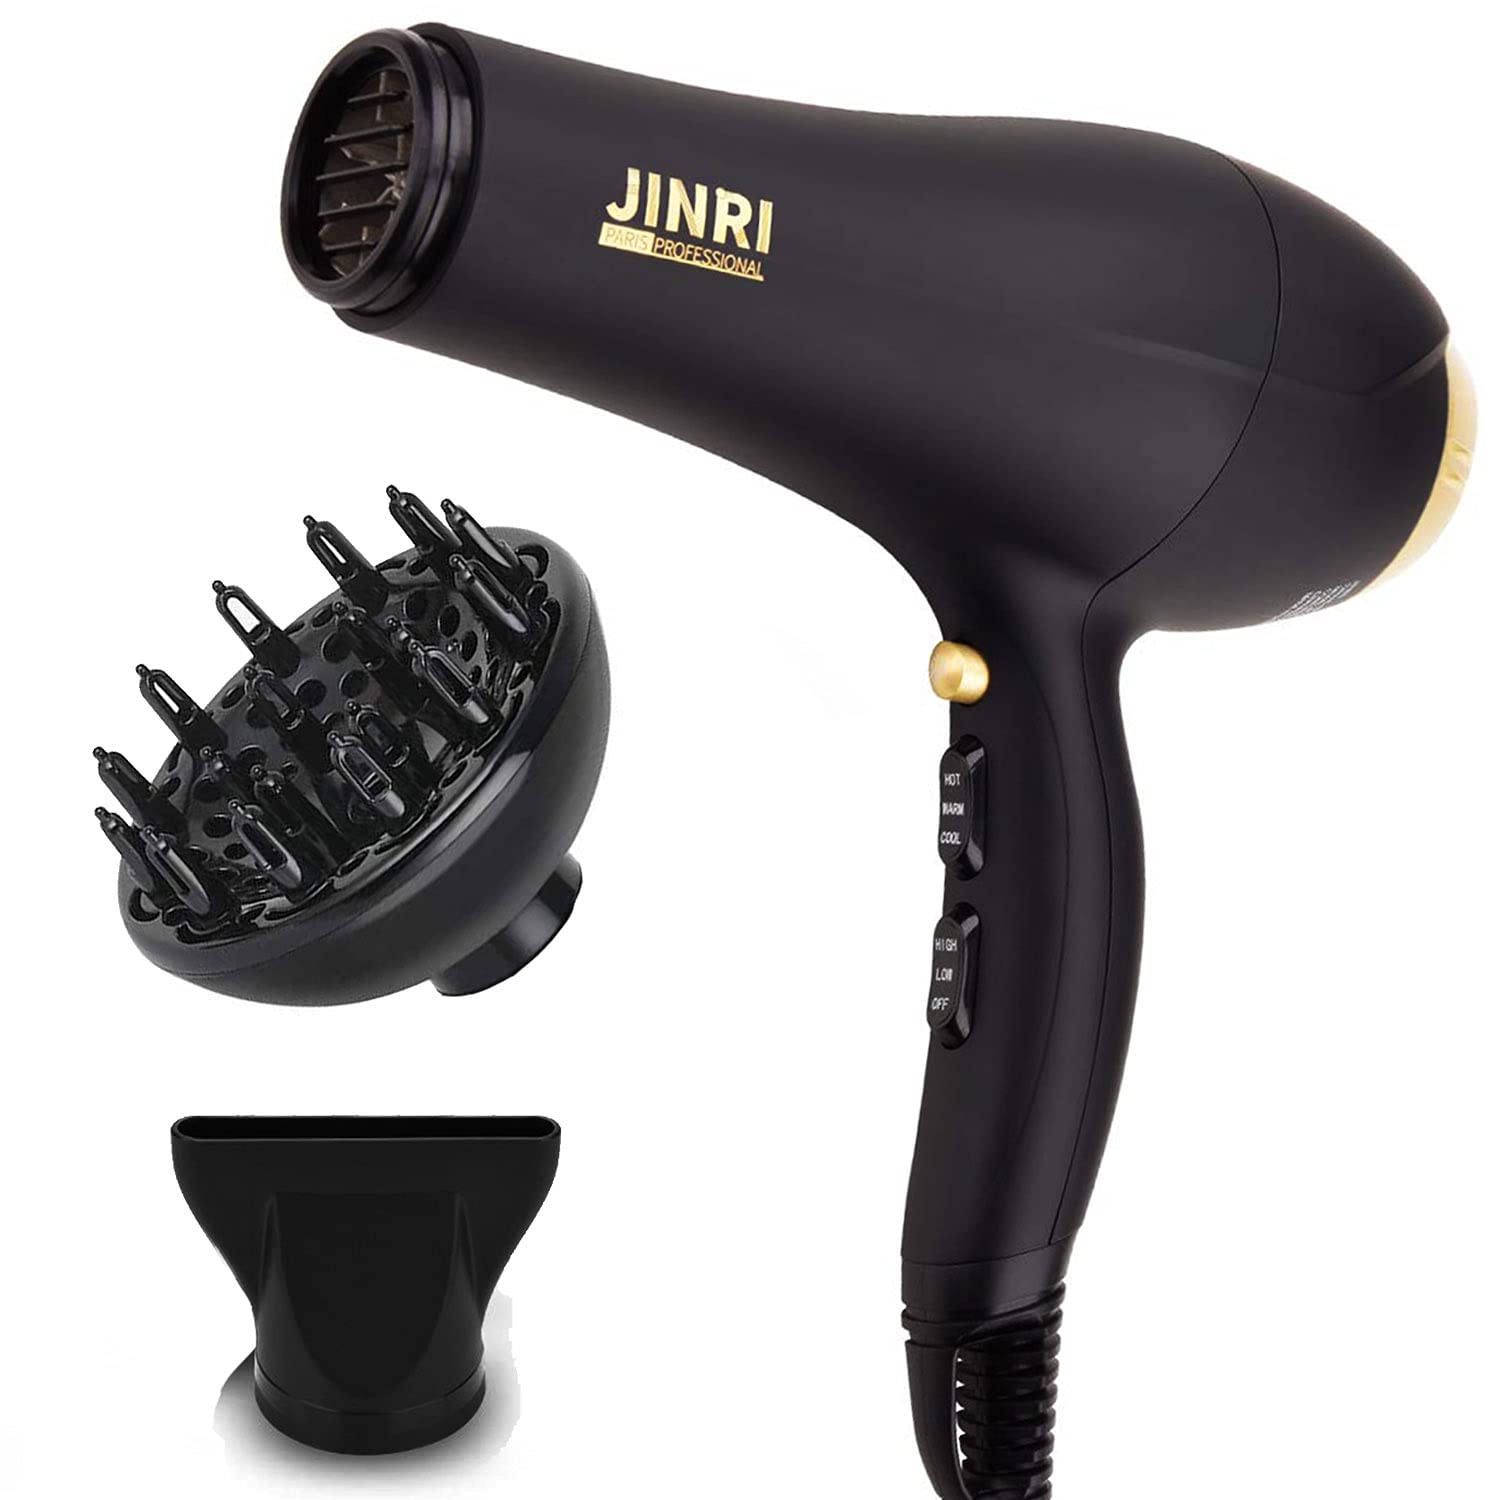 JINRI Removable Air Filter Infrared Hair Dryer